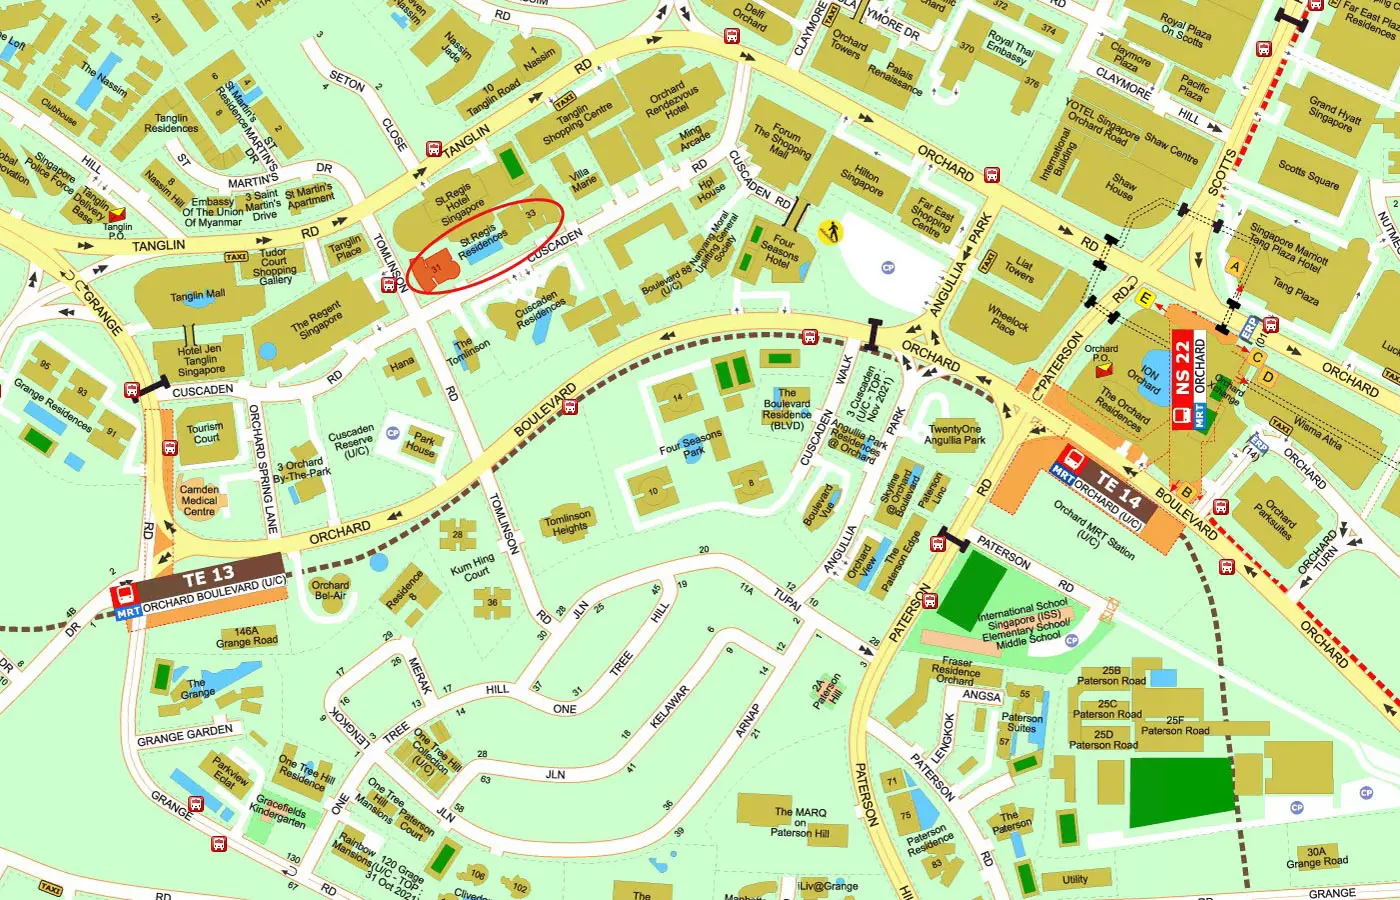 St-Regis-Residences-Condo-Street-Directory-Map